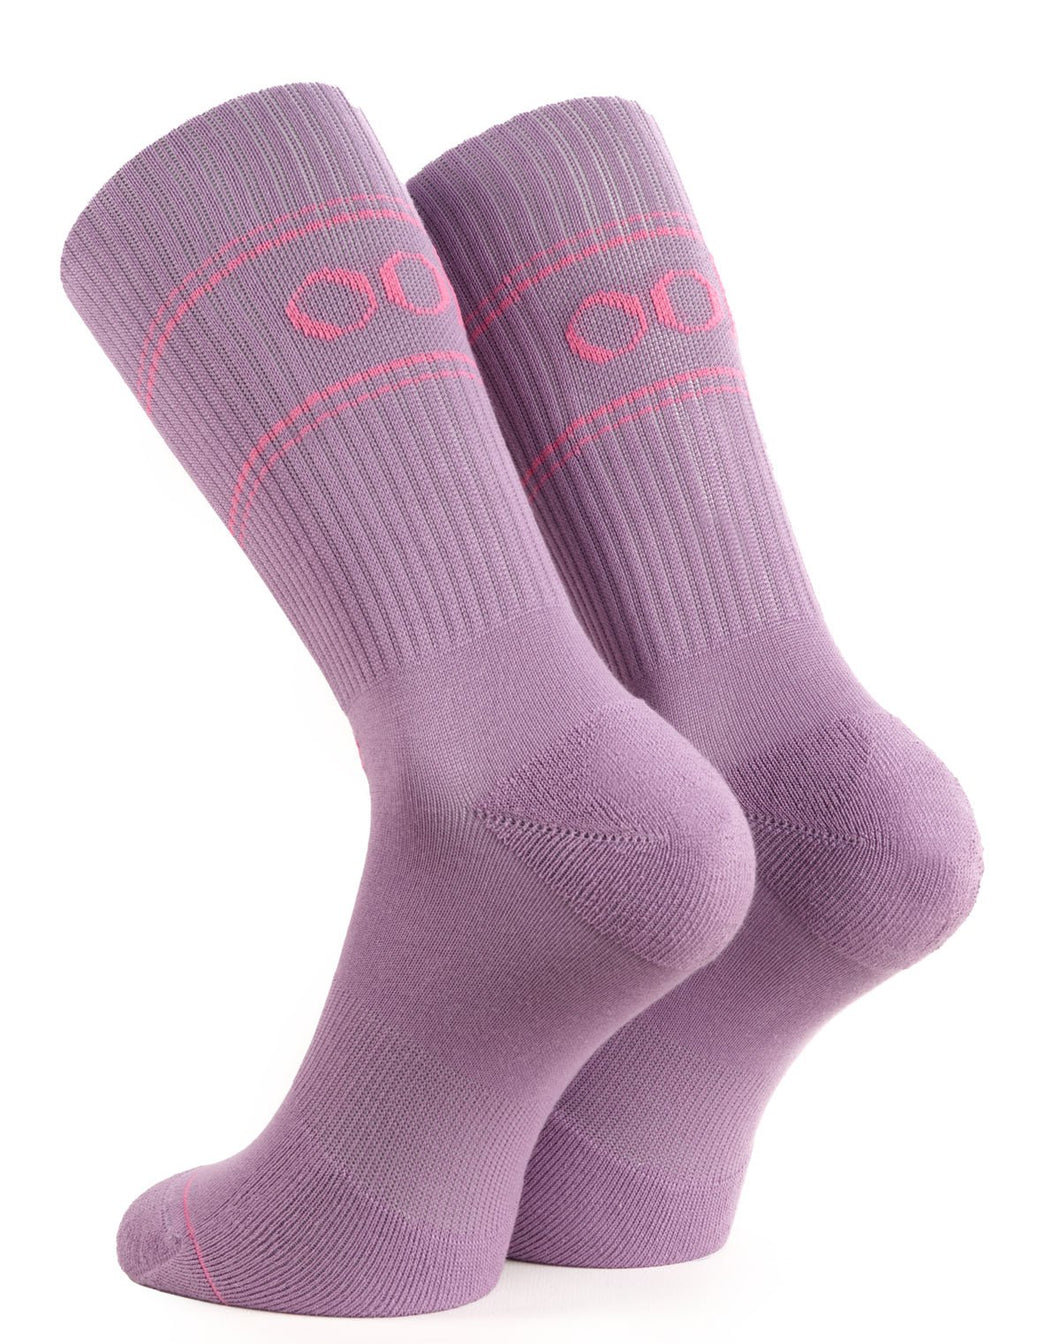 OOLEY Socks Lavender